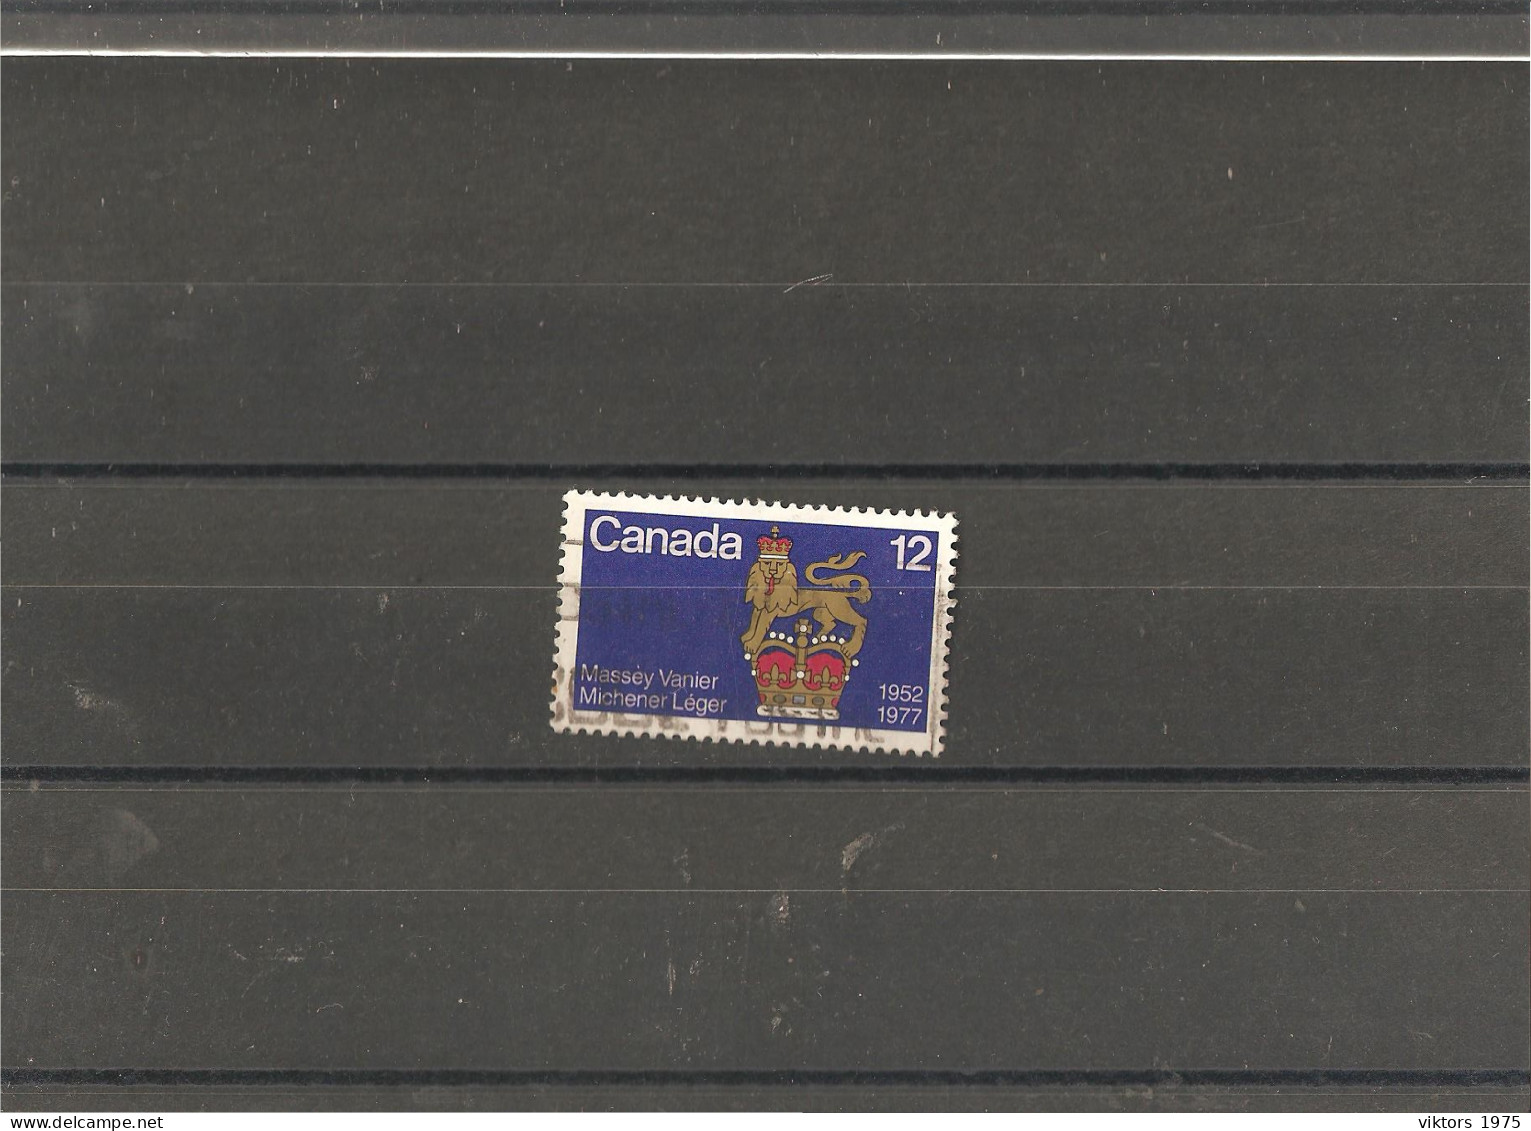 Used Stamp Nr.774 In Darnell Catalog - Usados